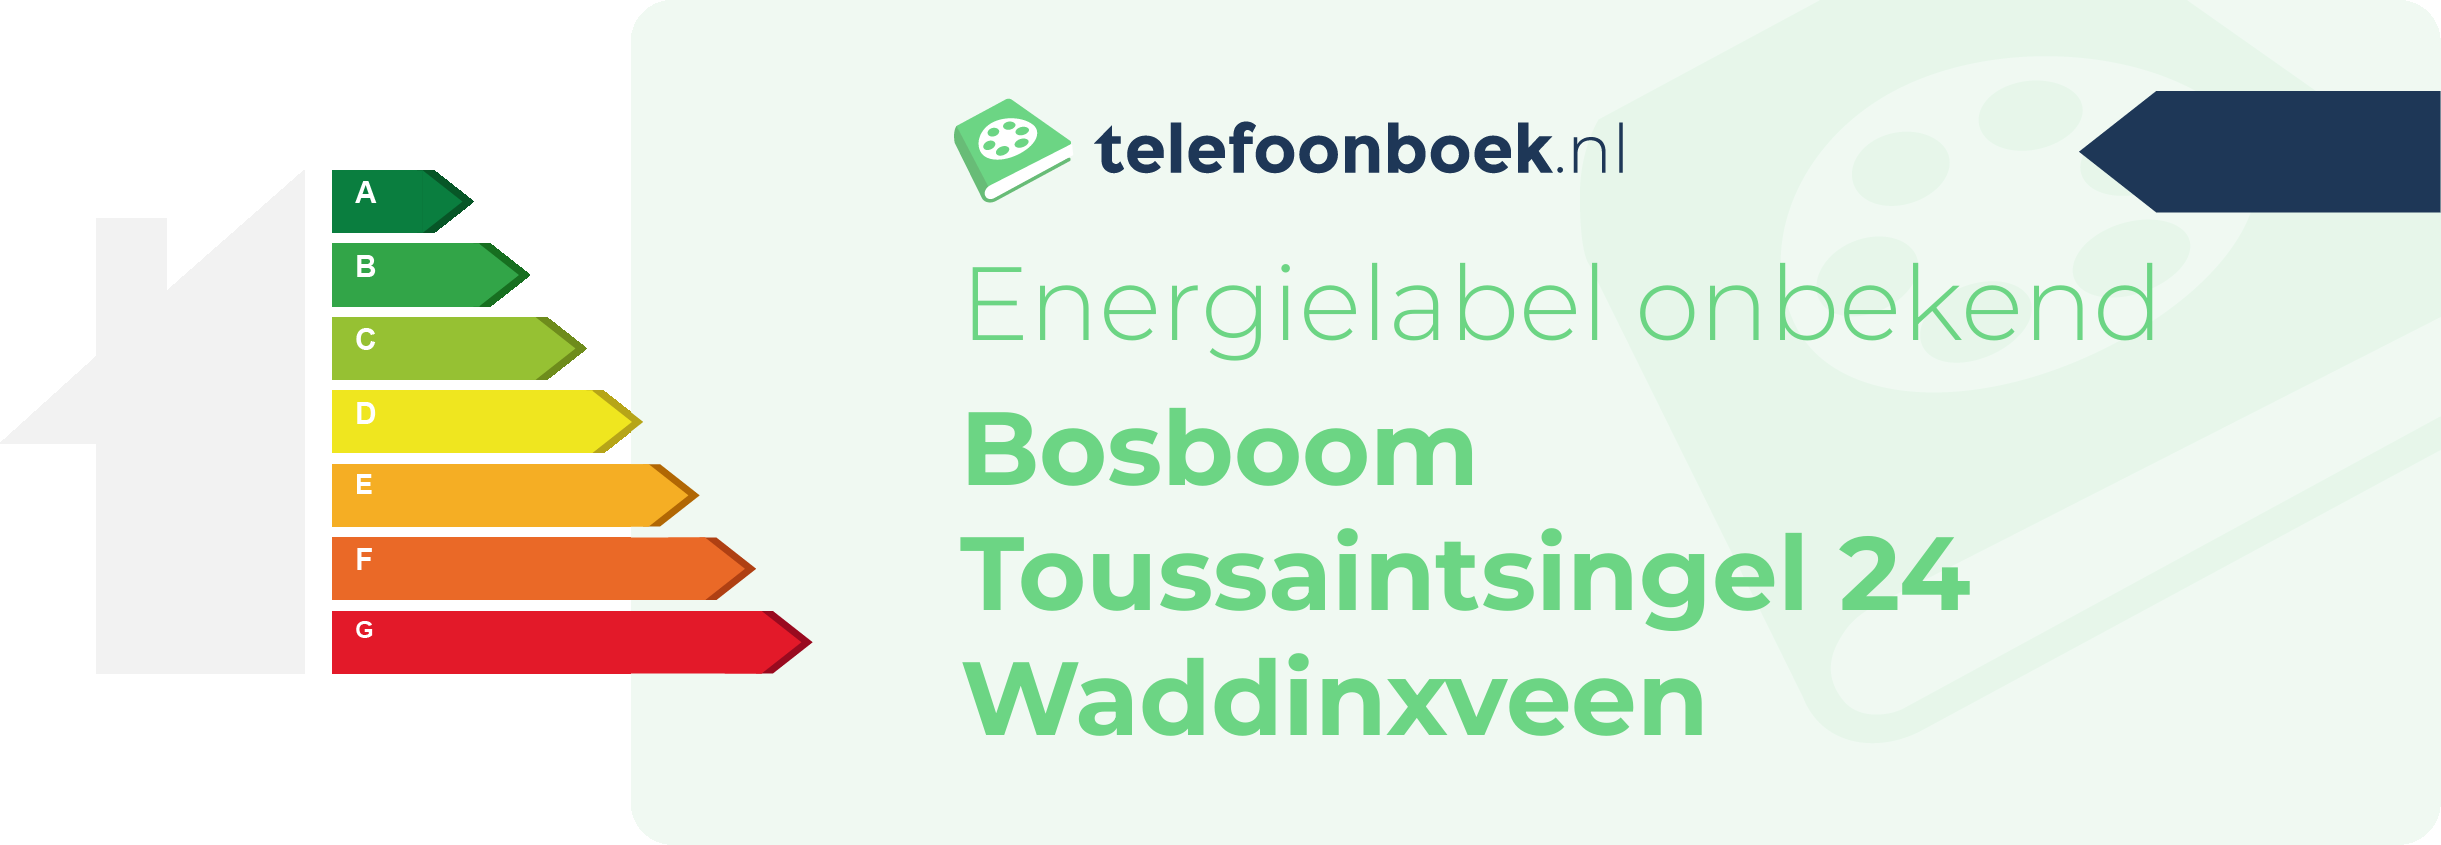 Energielabel Bosboom Toussaintsingel 24 Waddinxveen